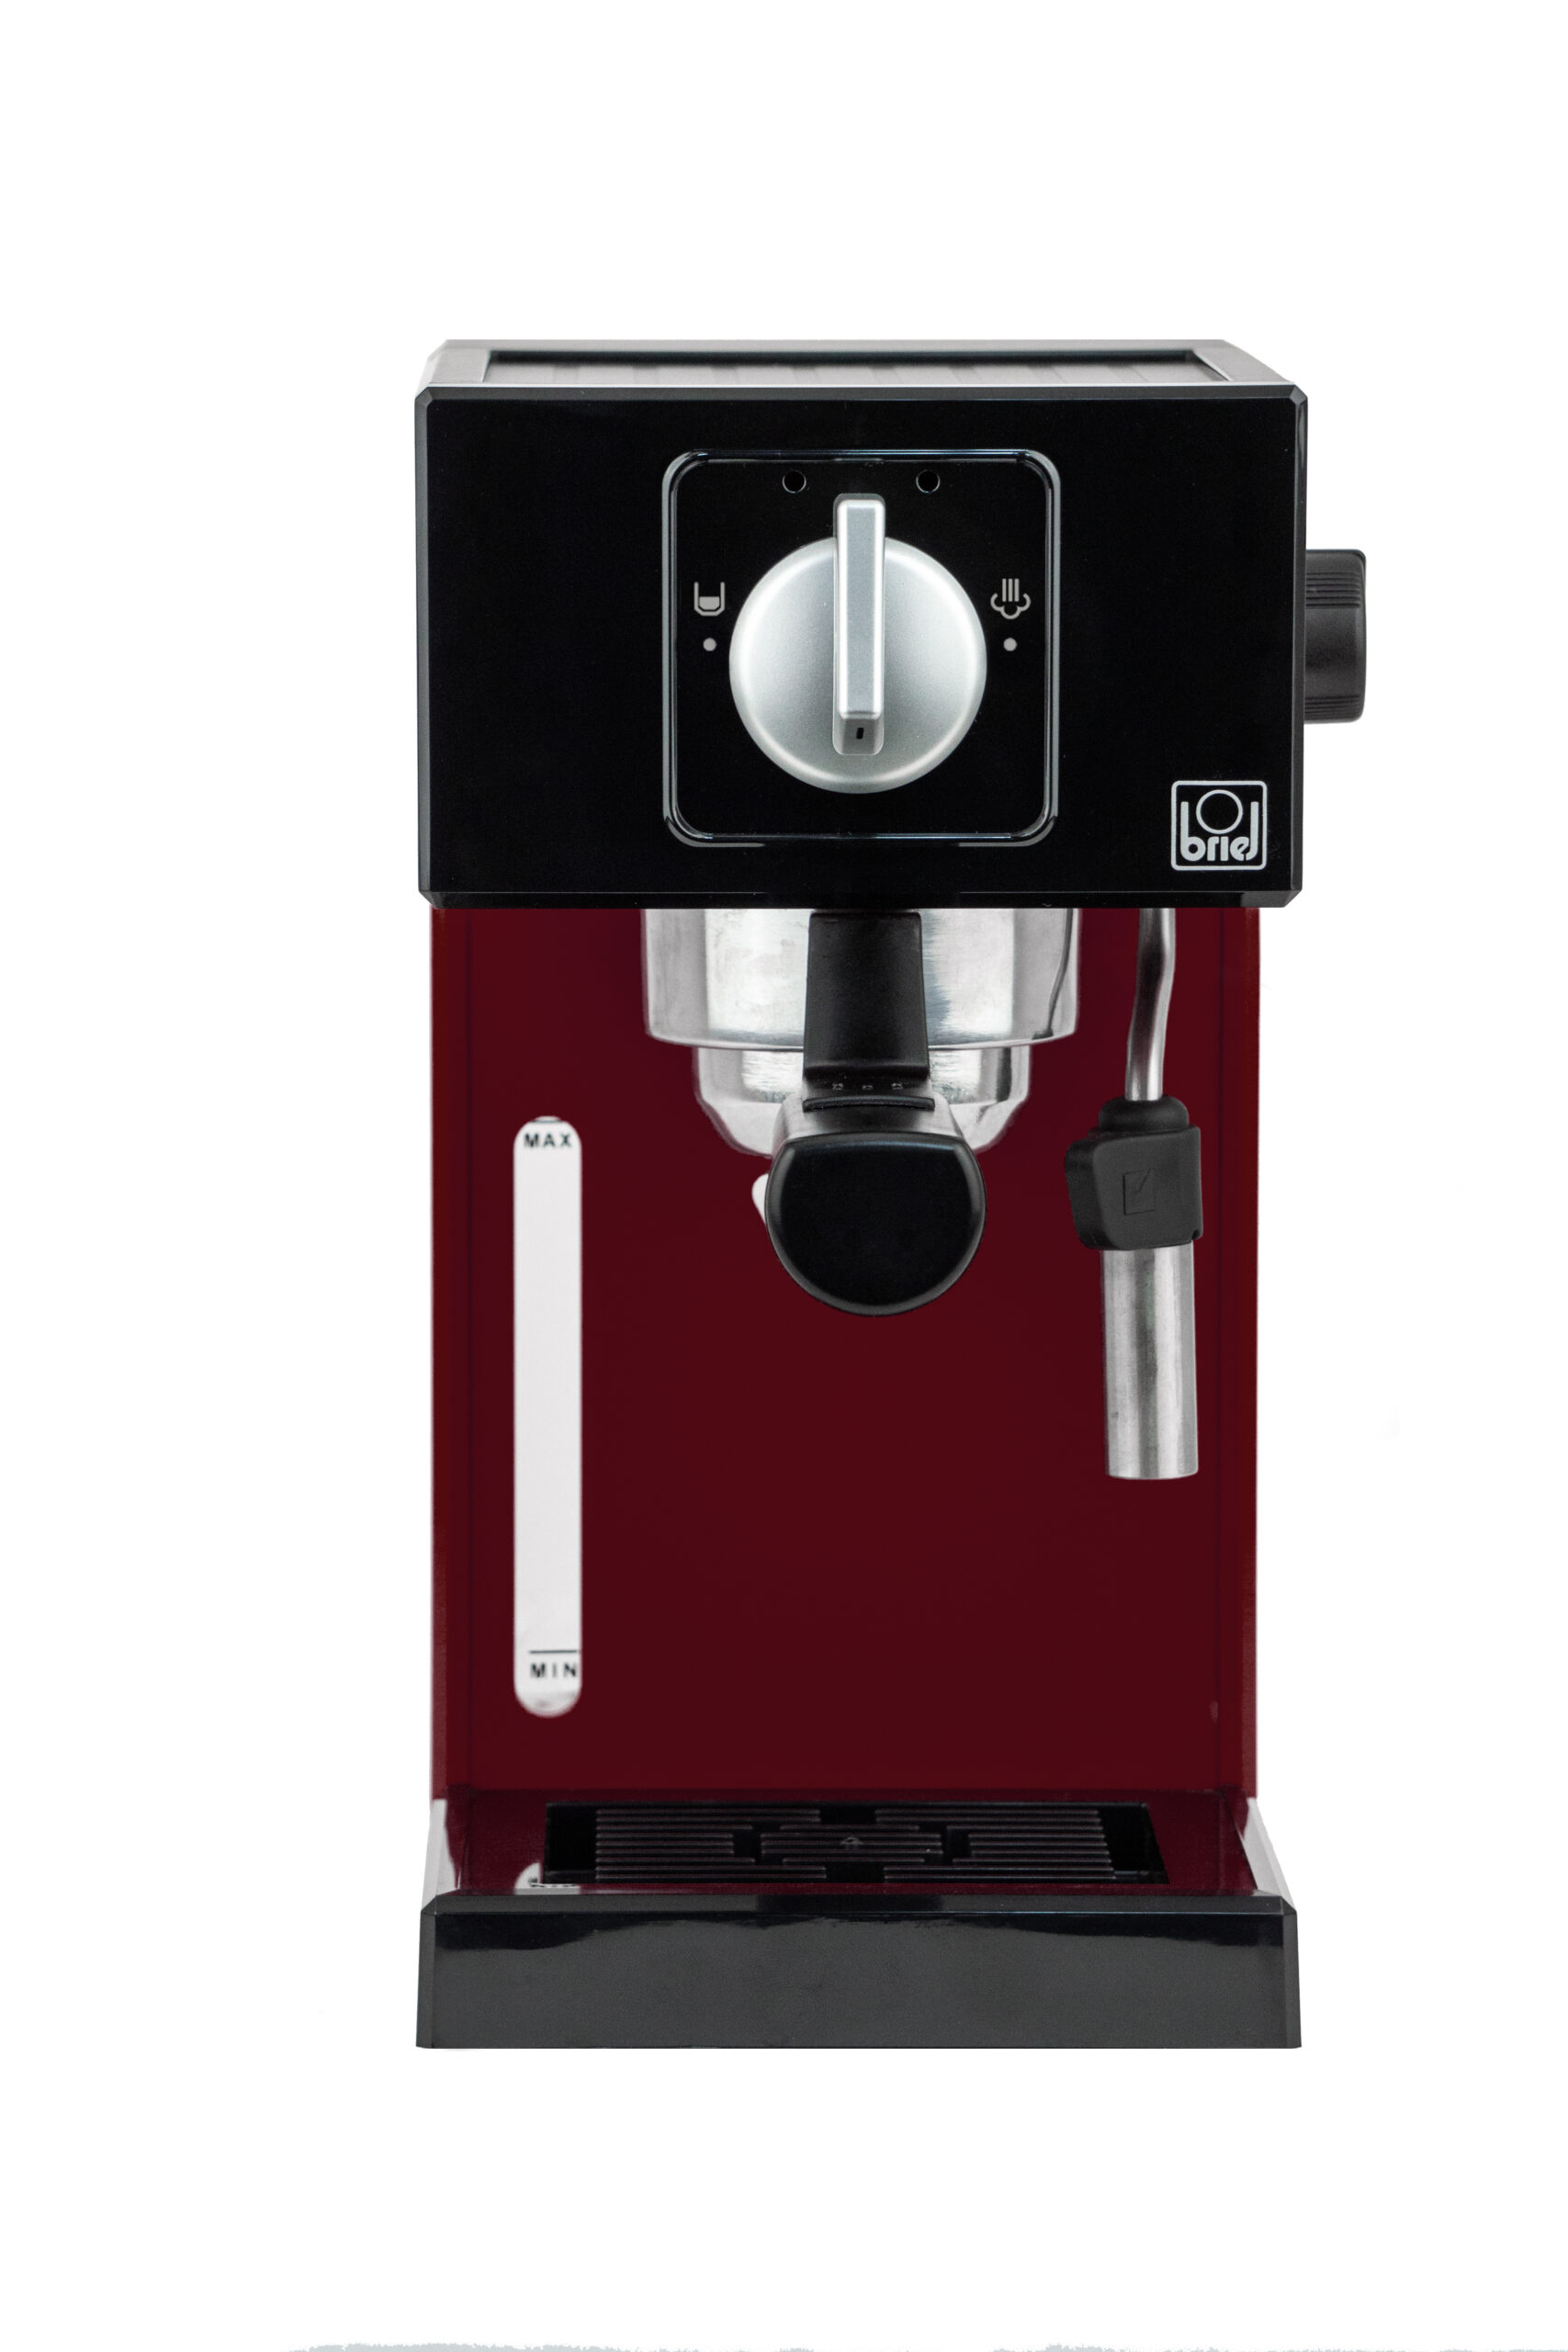 Maquina-cafe-espresso-A1-MANUAL-WINE-5-scaled-1.jpg